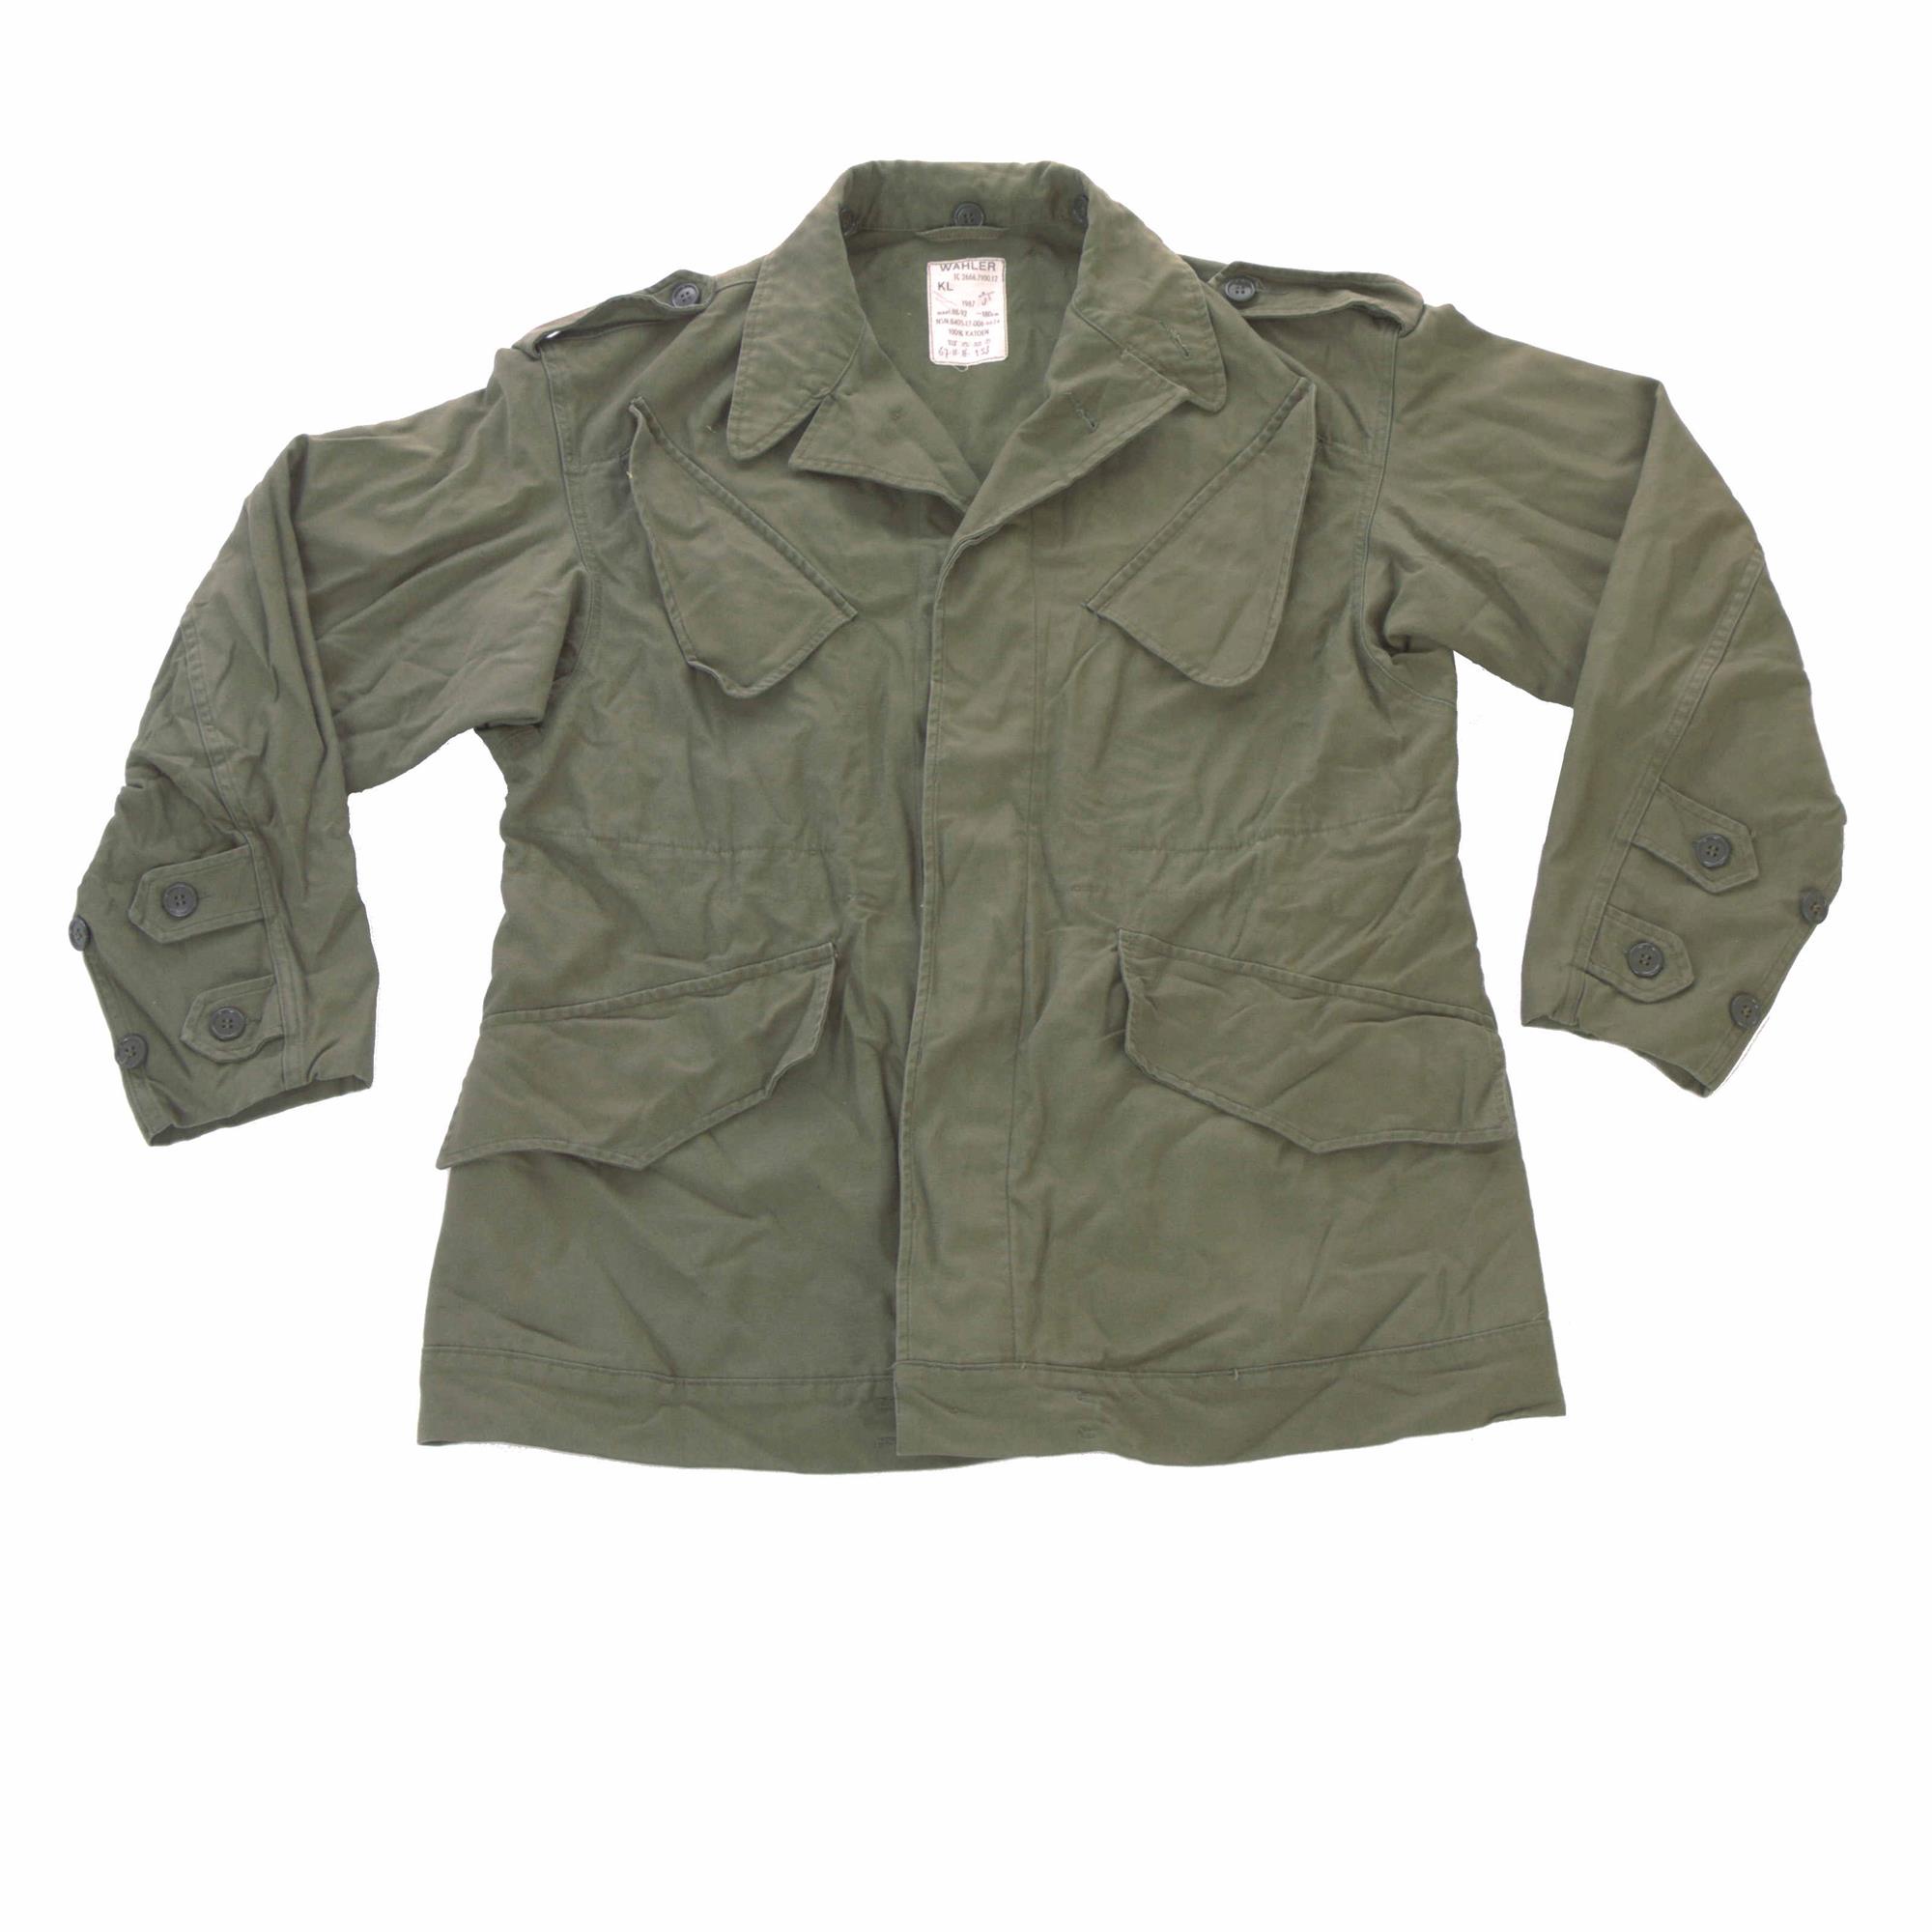 Dutch army surplus olive green cotton m65 (ish) style field jacket ...